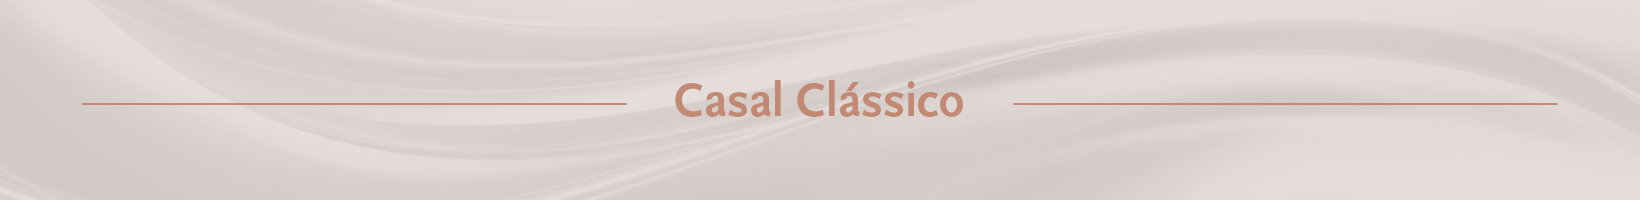 Banner Casal Classico